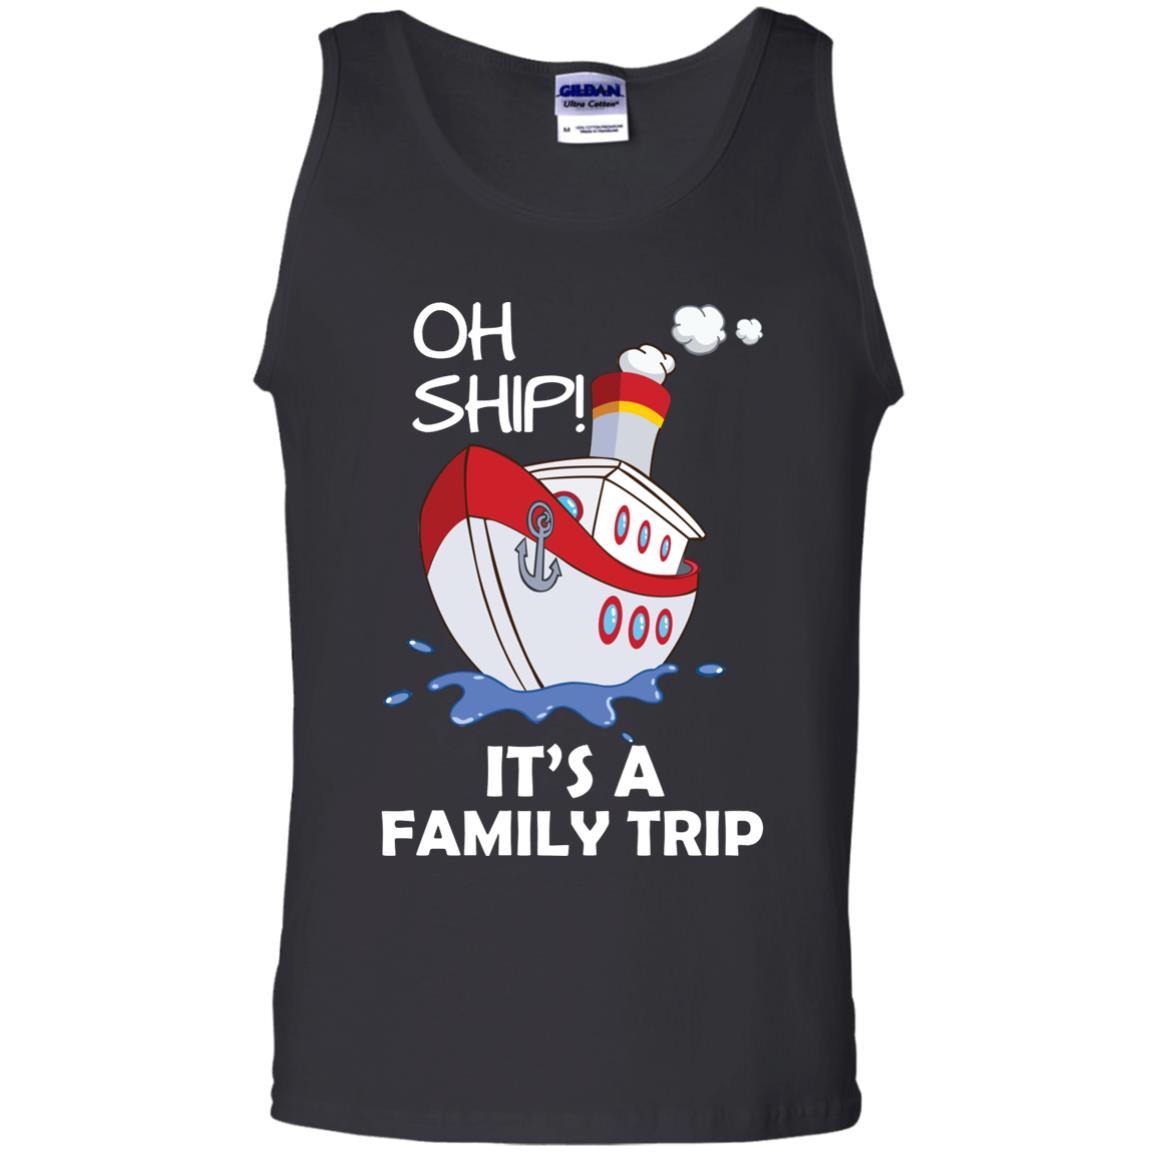 Oh Ship It's A Family Trip Cruise Ship T-shirtG220 Gildan 100% Cotton Tank Top